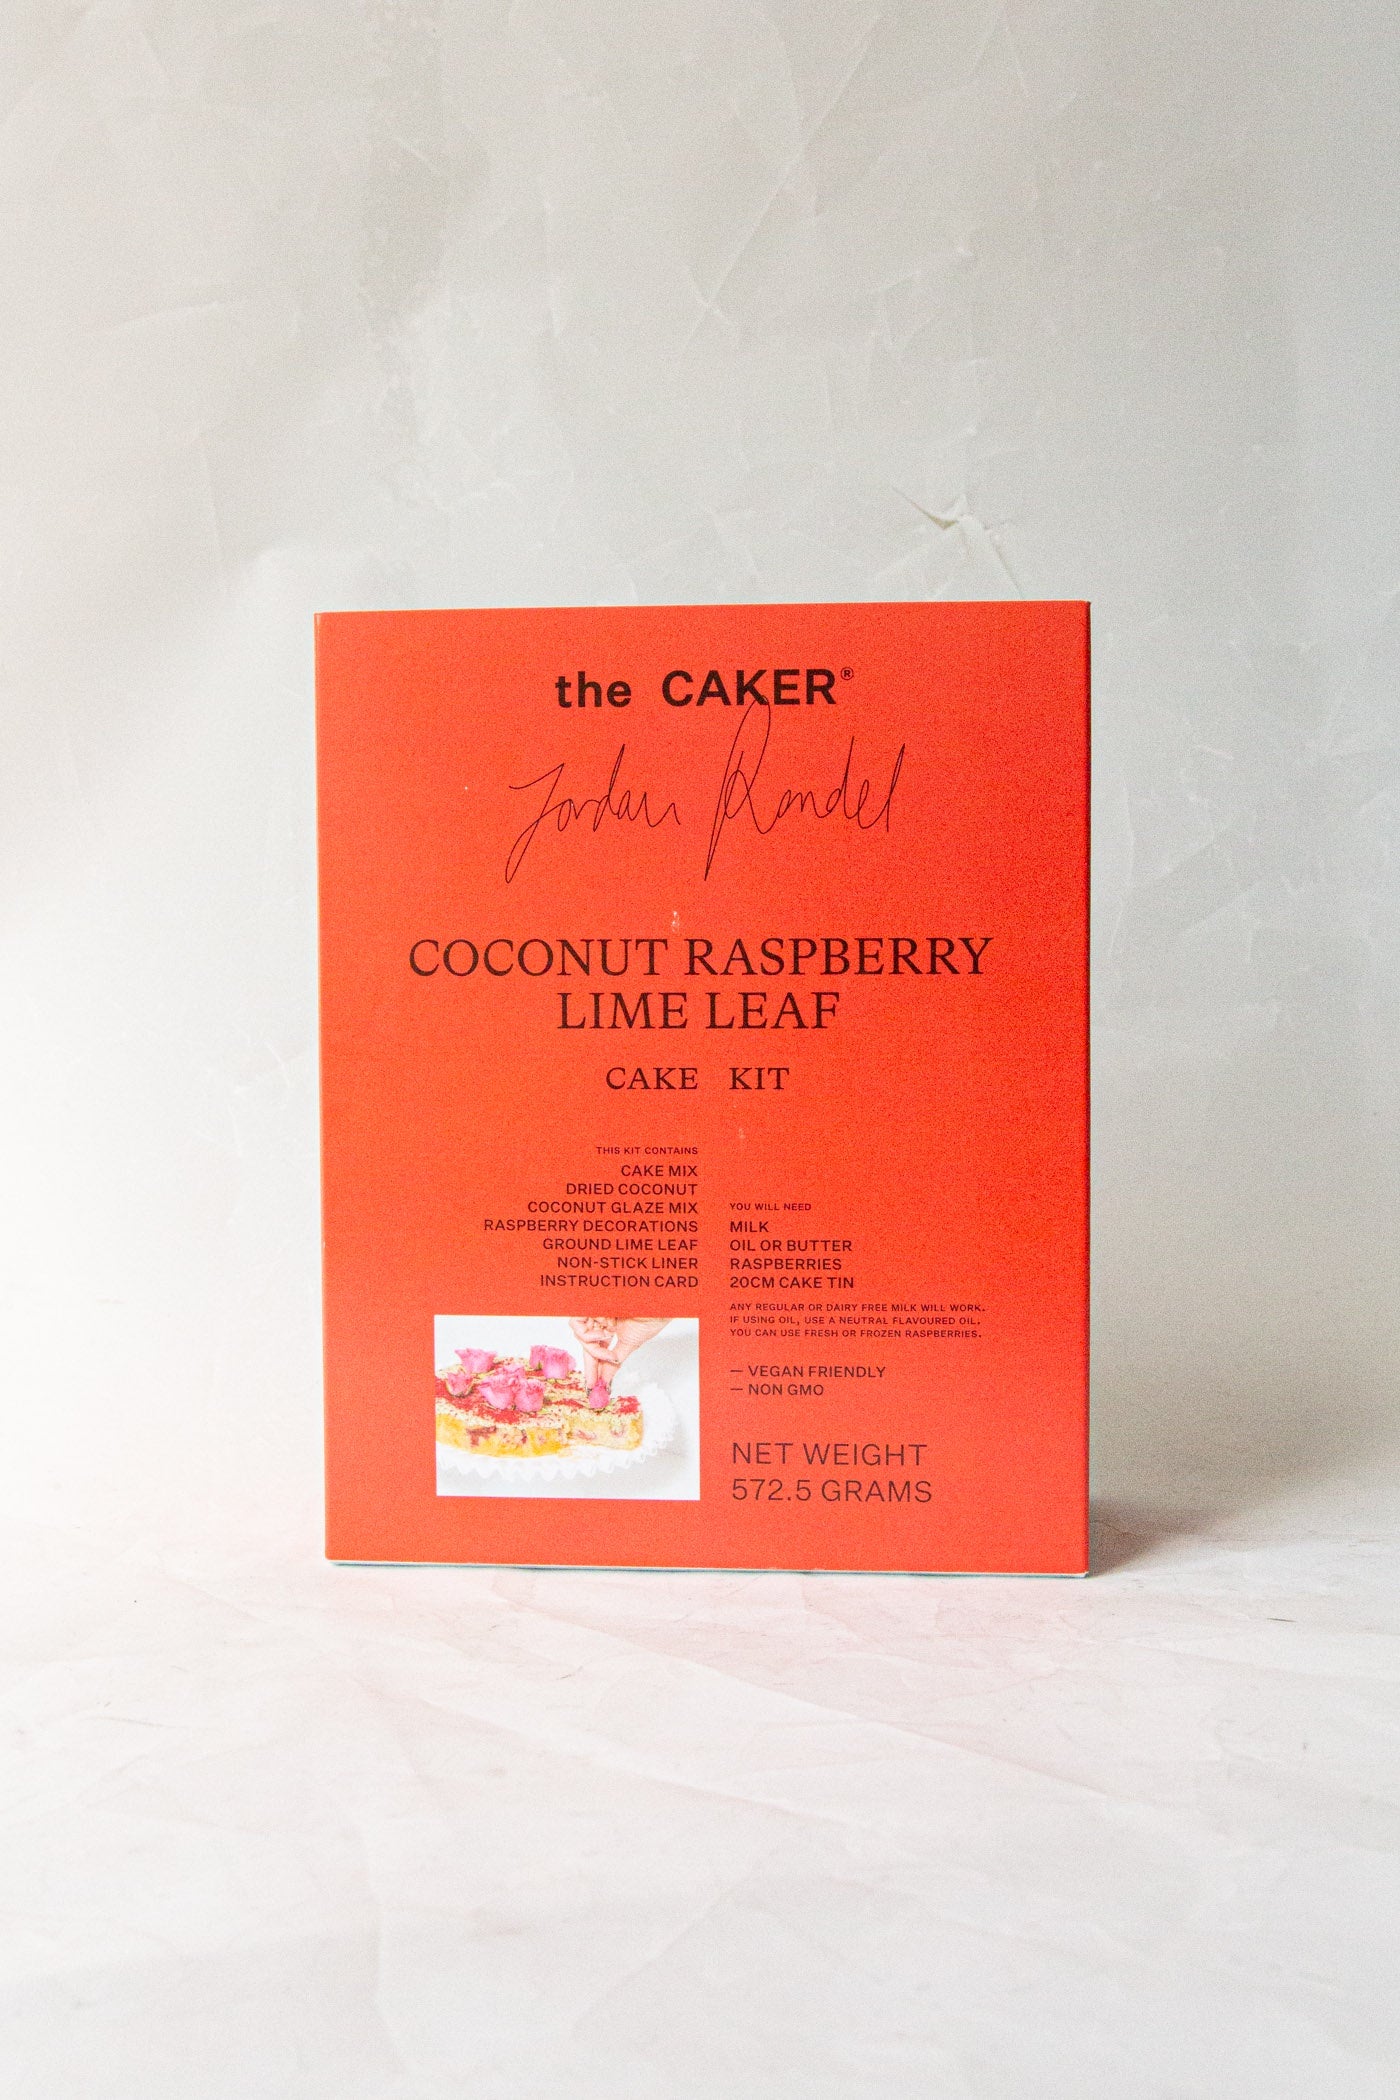 Coconut Raspberry Lime Leaf Cake Kit